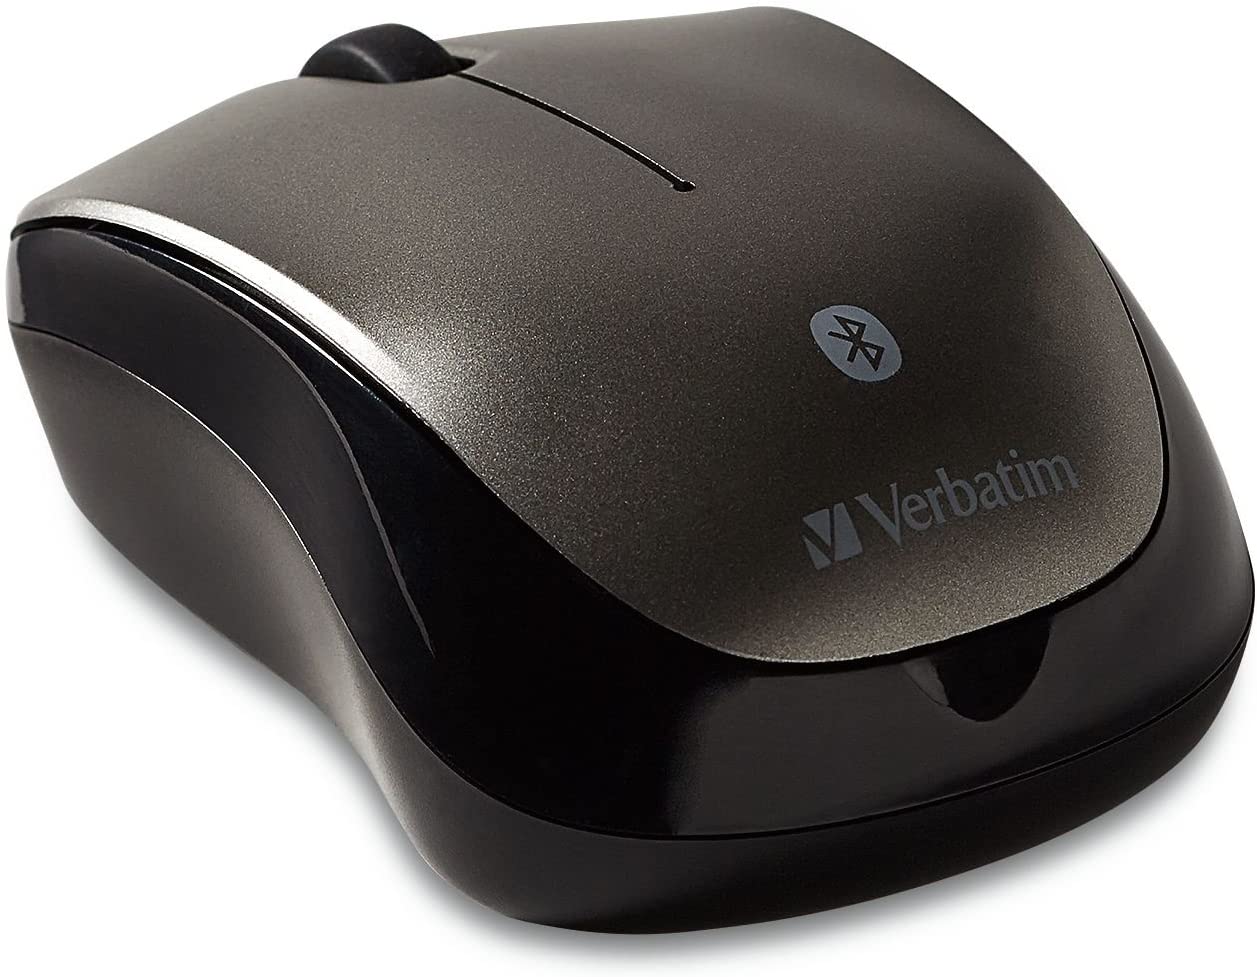 Verbatim BlueTooth Wireless Multi-Trac  LED, Optical Mouse - Black Colour -- 1 Year Verbatim Warranty